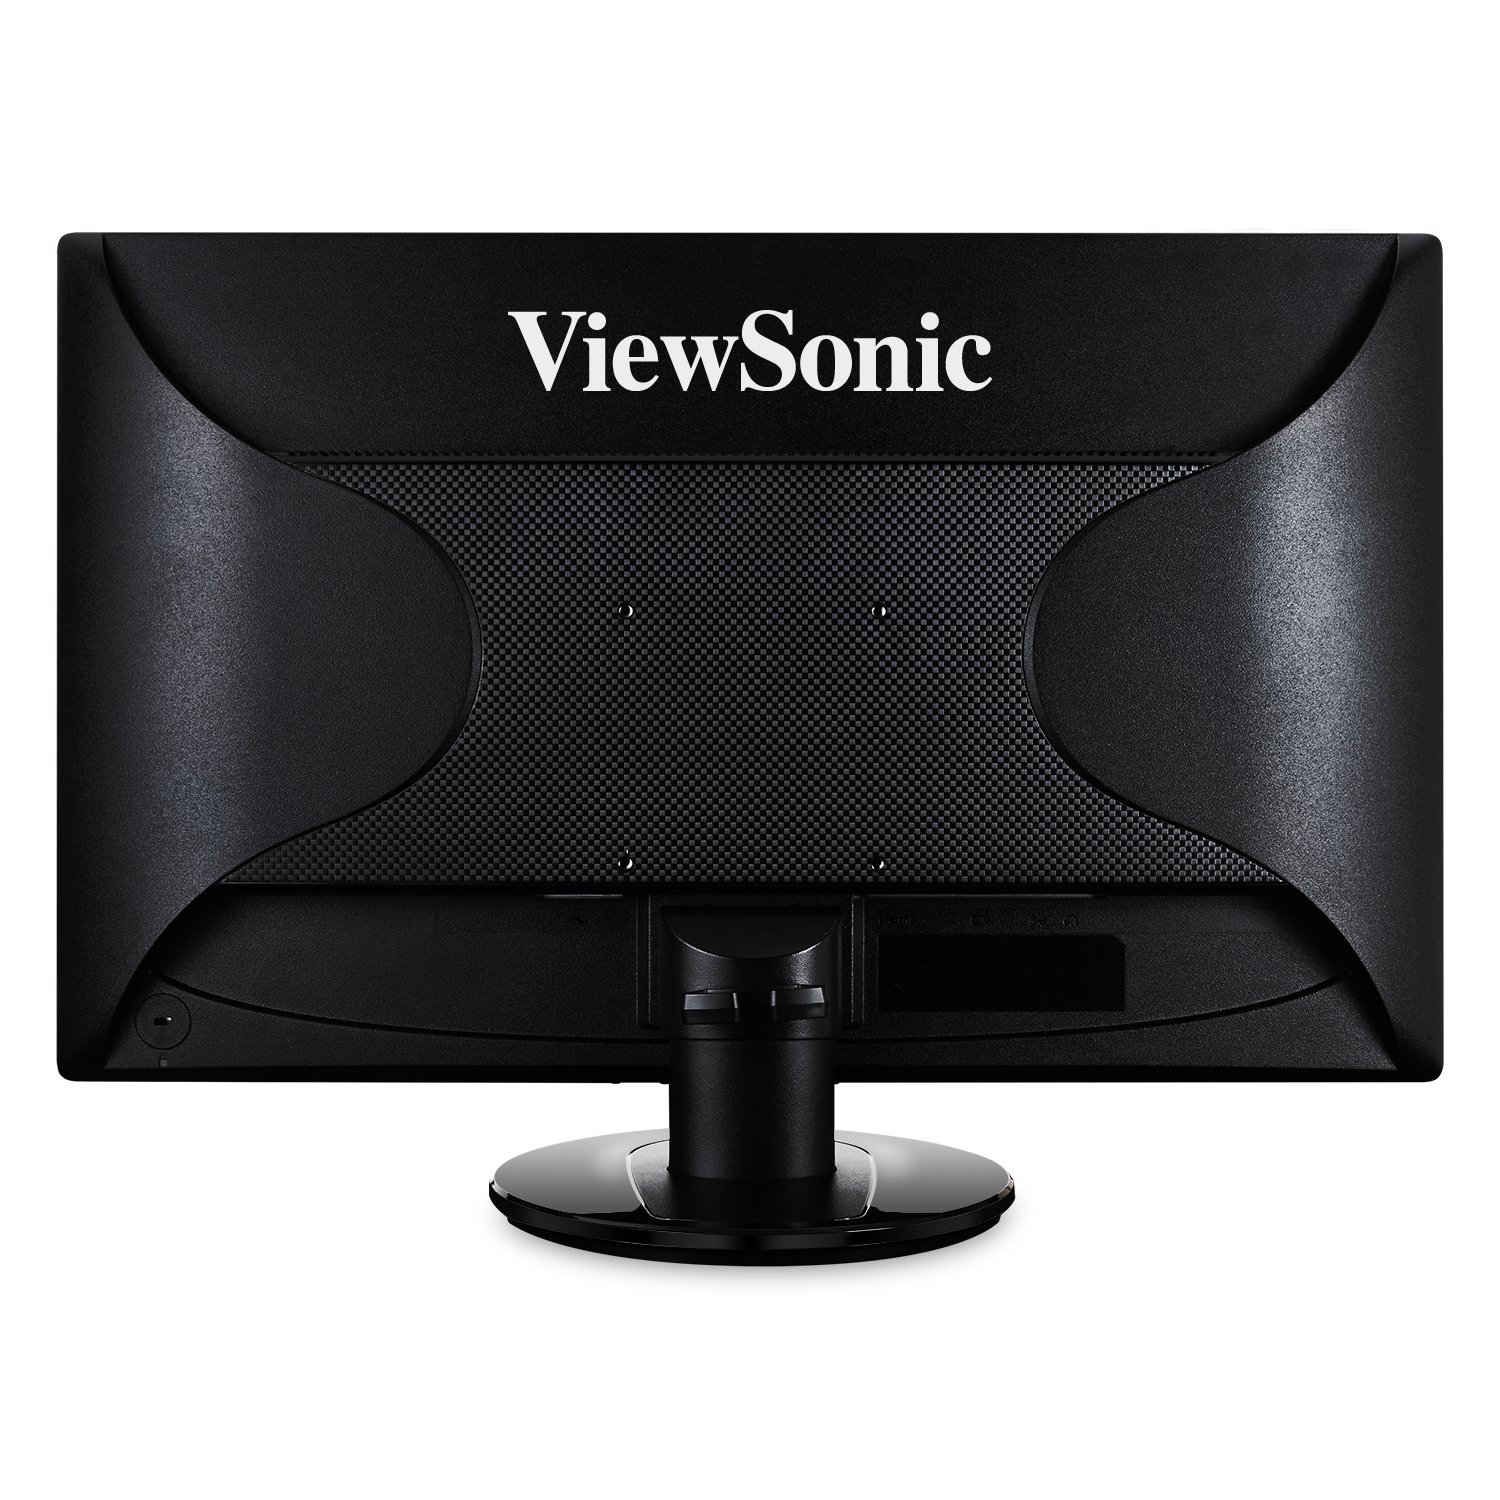 ViewSonic VA2746M-LED 27 Inch Full HD 1080p LED Monitor with DVI and VGA Inputs - image 2 of 5